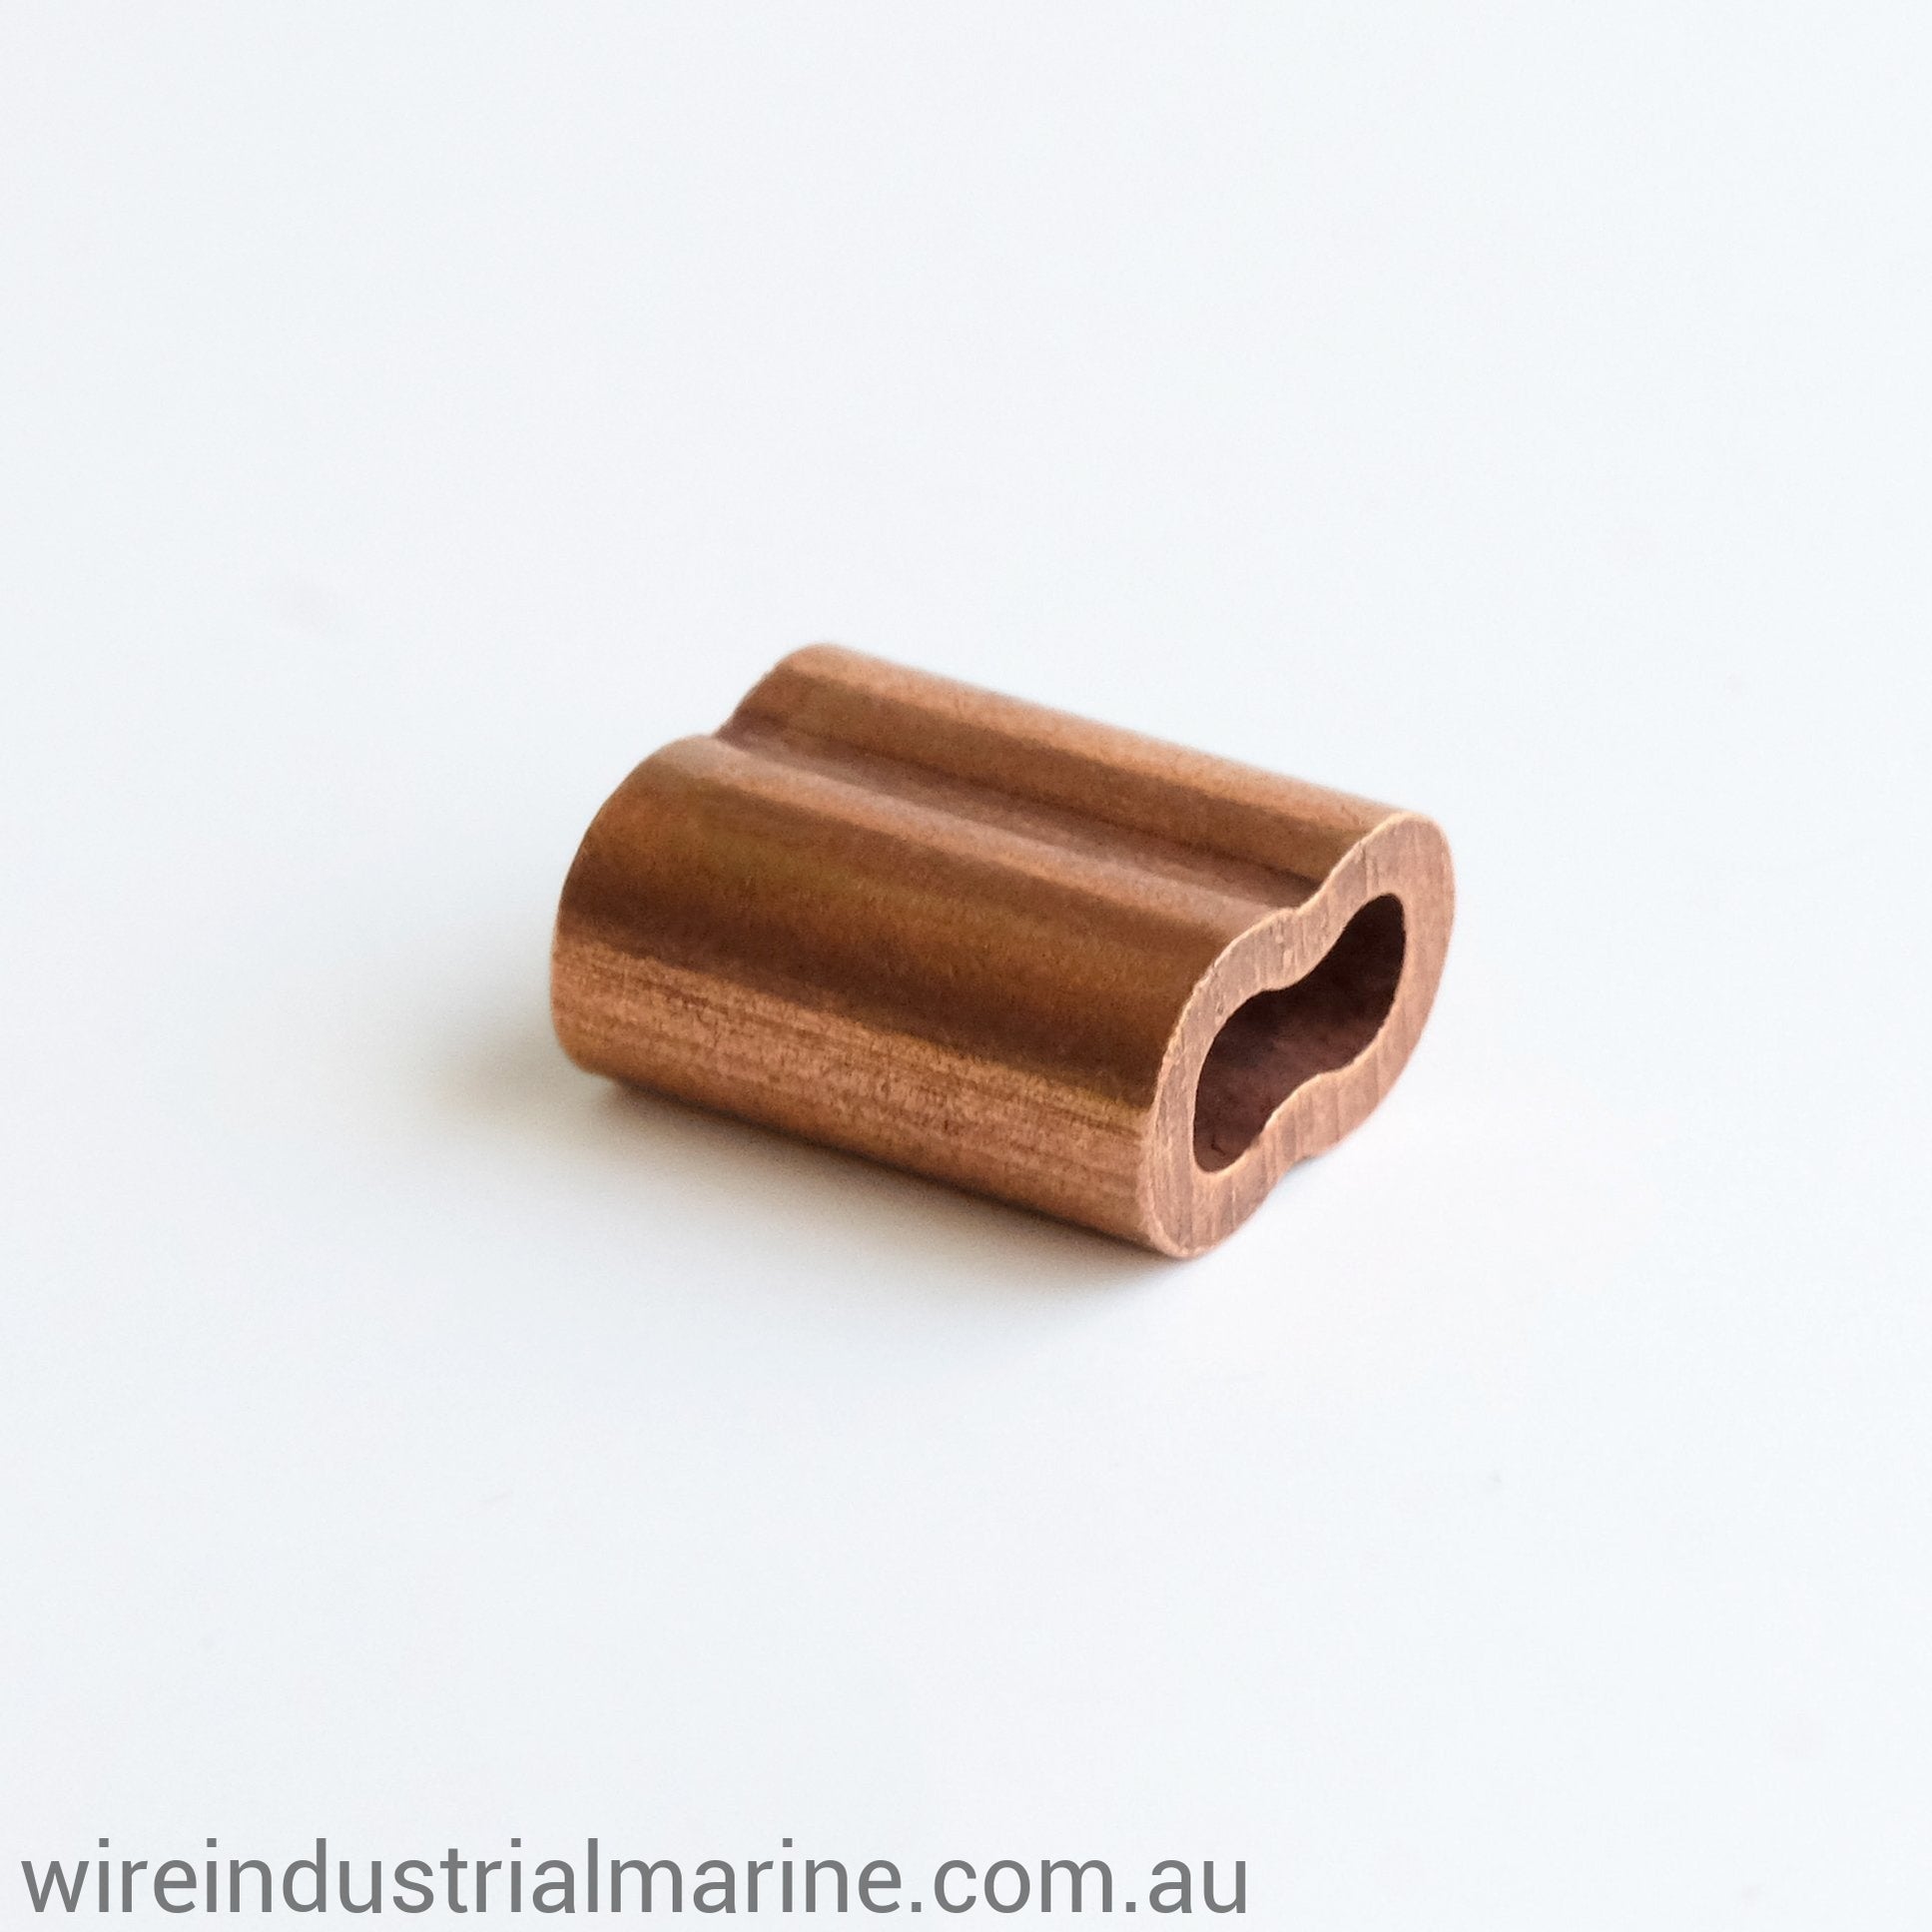 2.4mm Copper swage for wire rope-CS-2.4-wireindustrialmarine